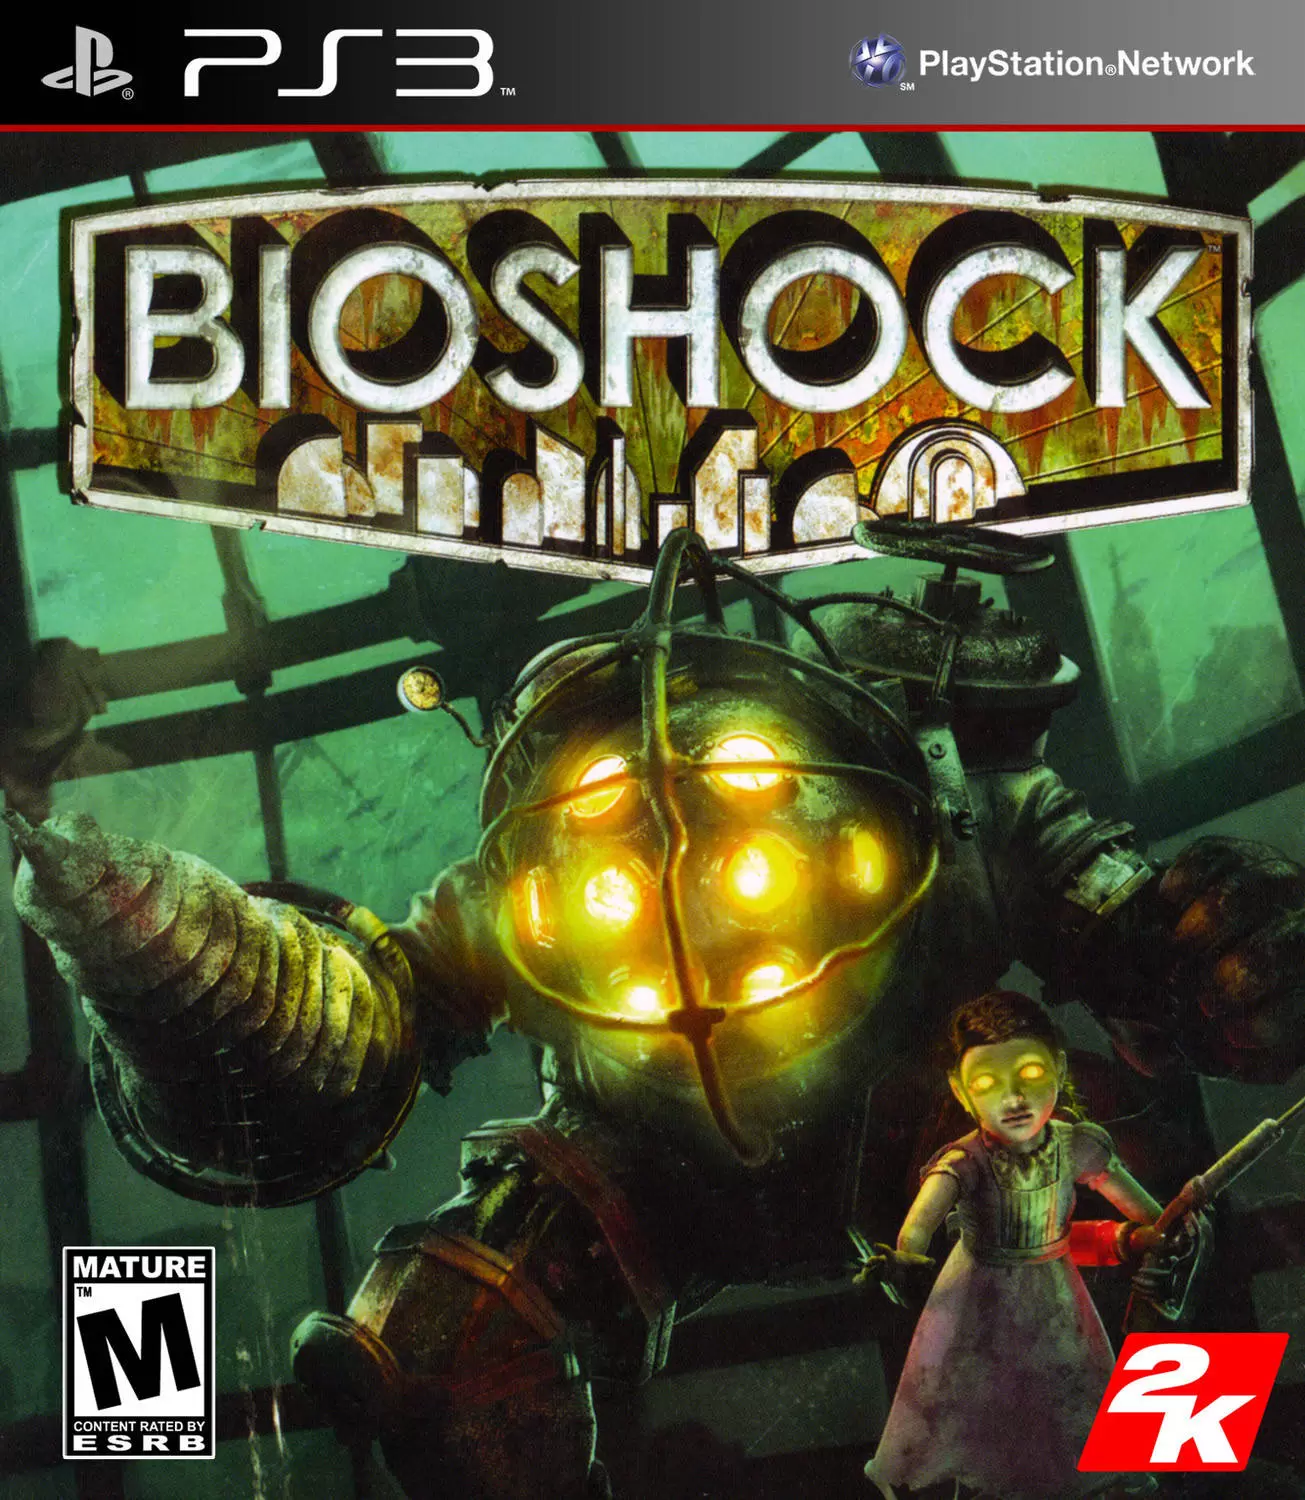 PS3 Games - BioShock